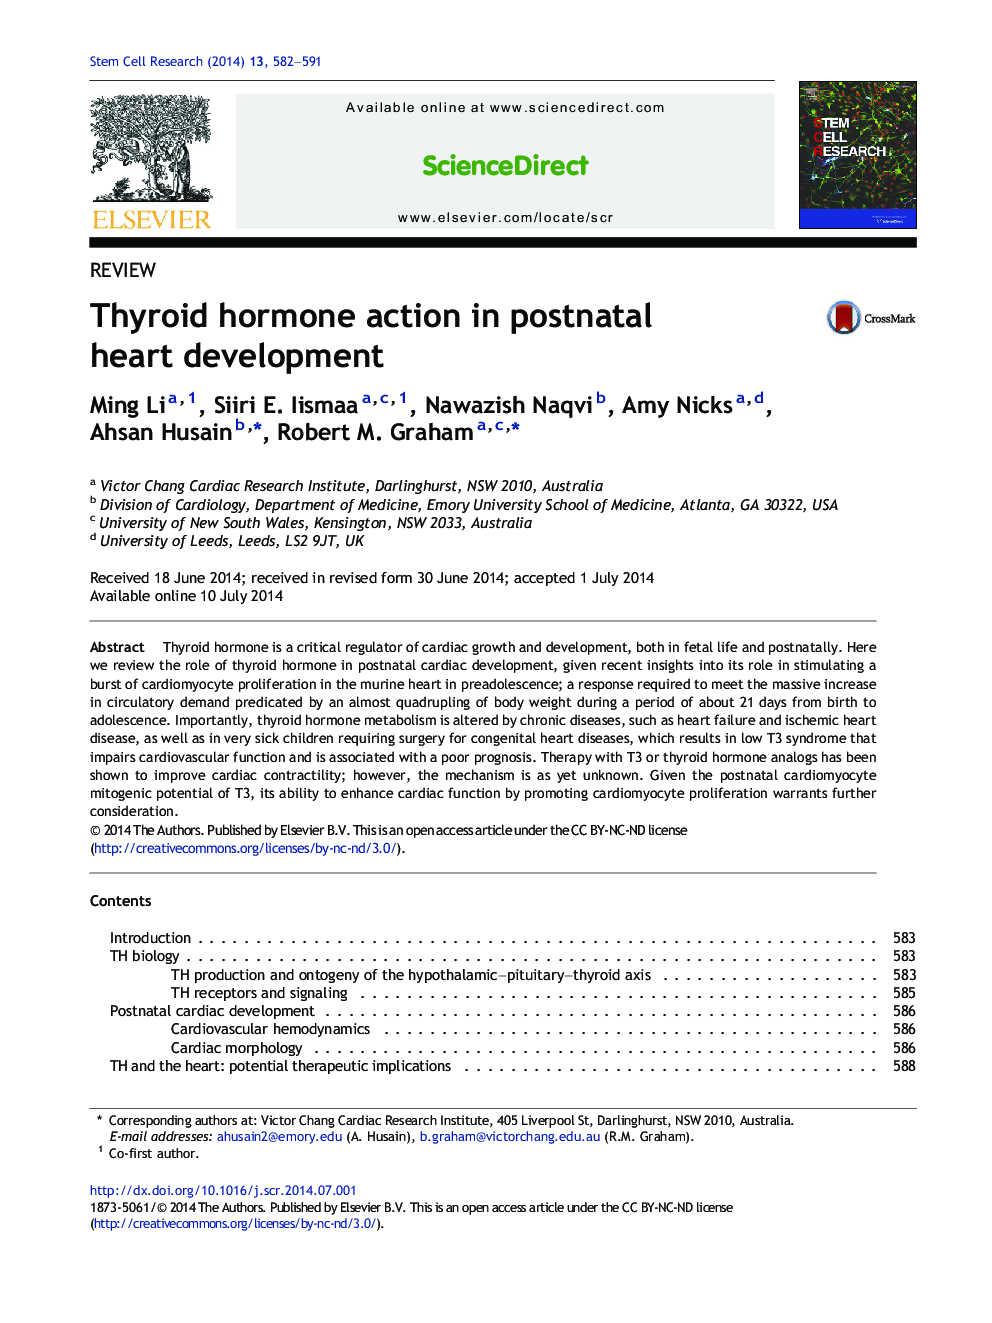 Thyroid hormone action in postnatal heart development